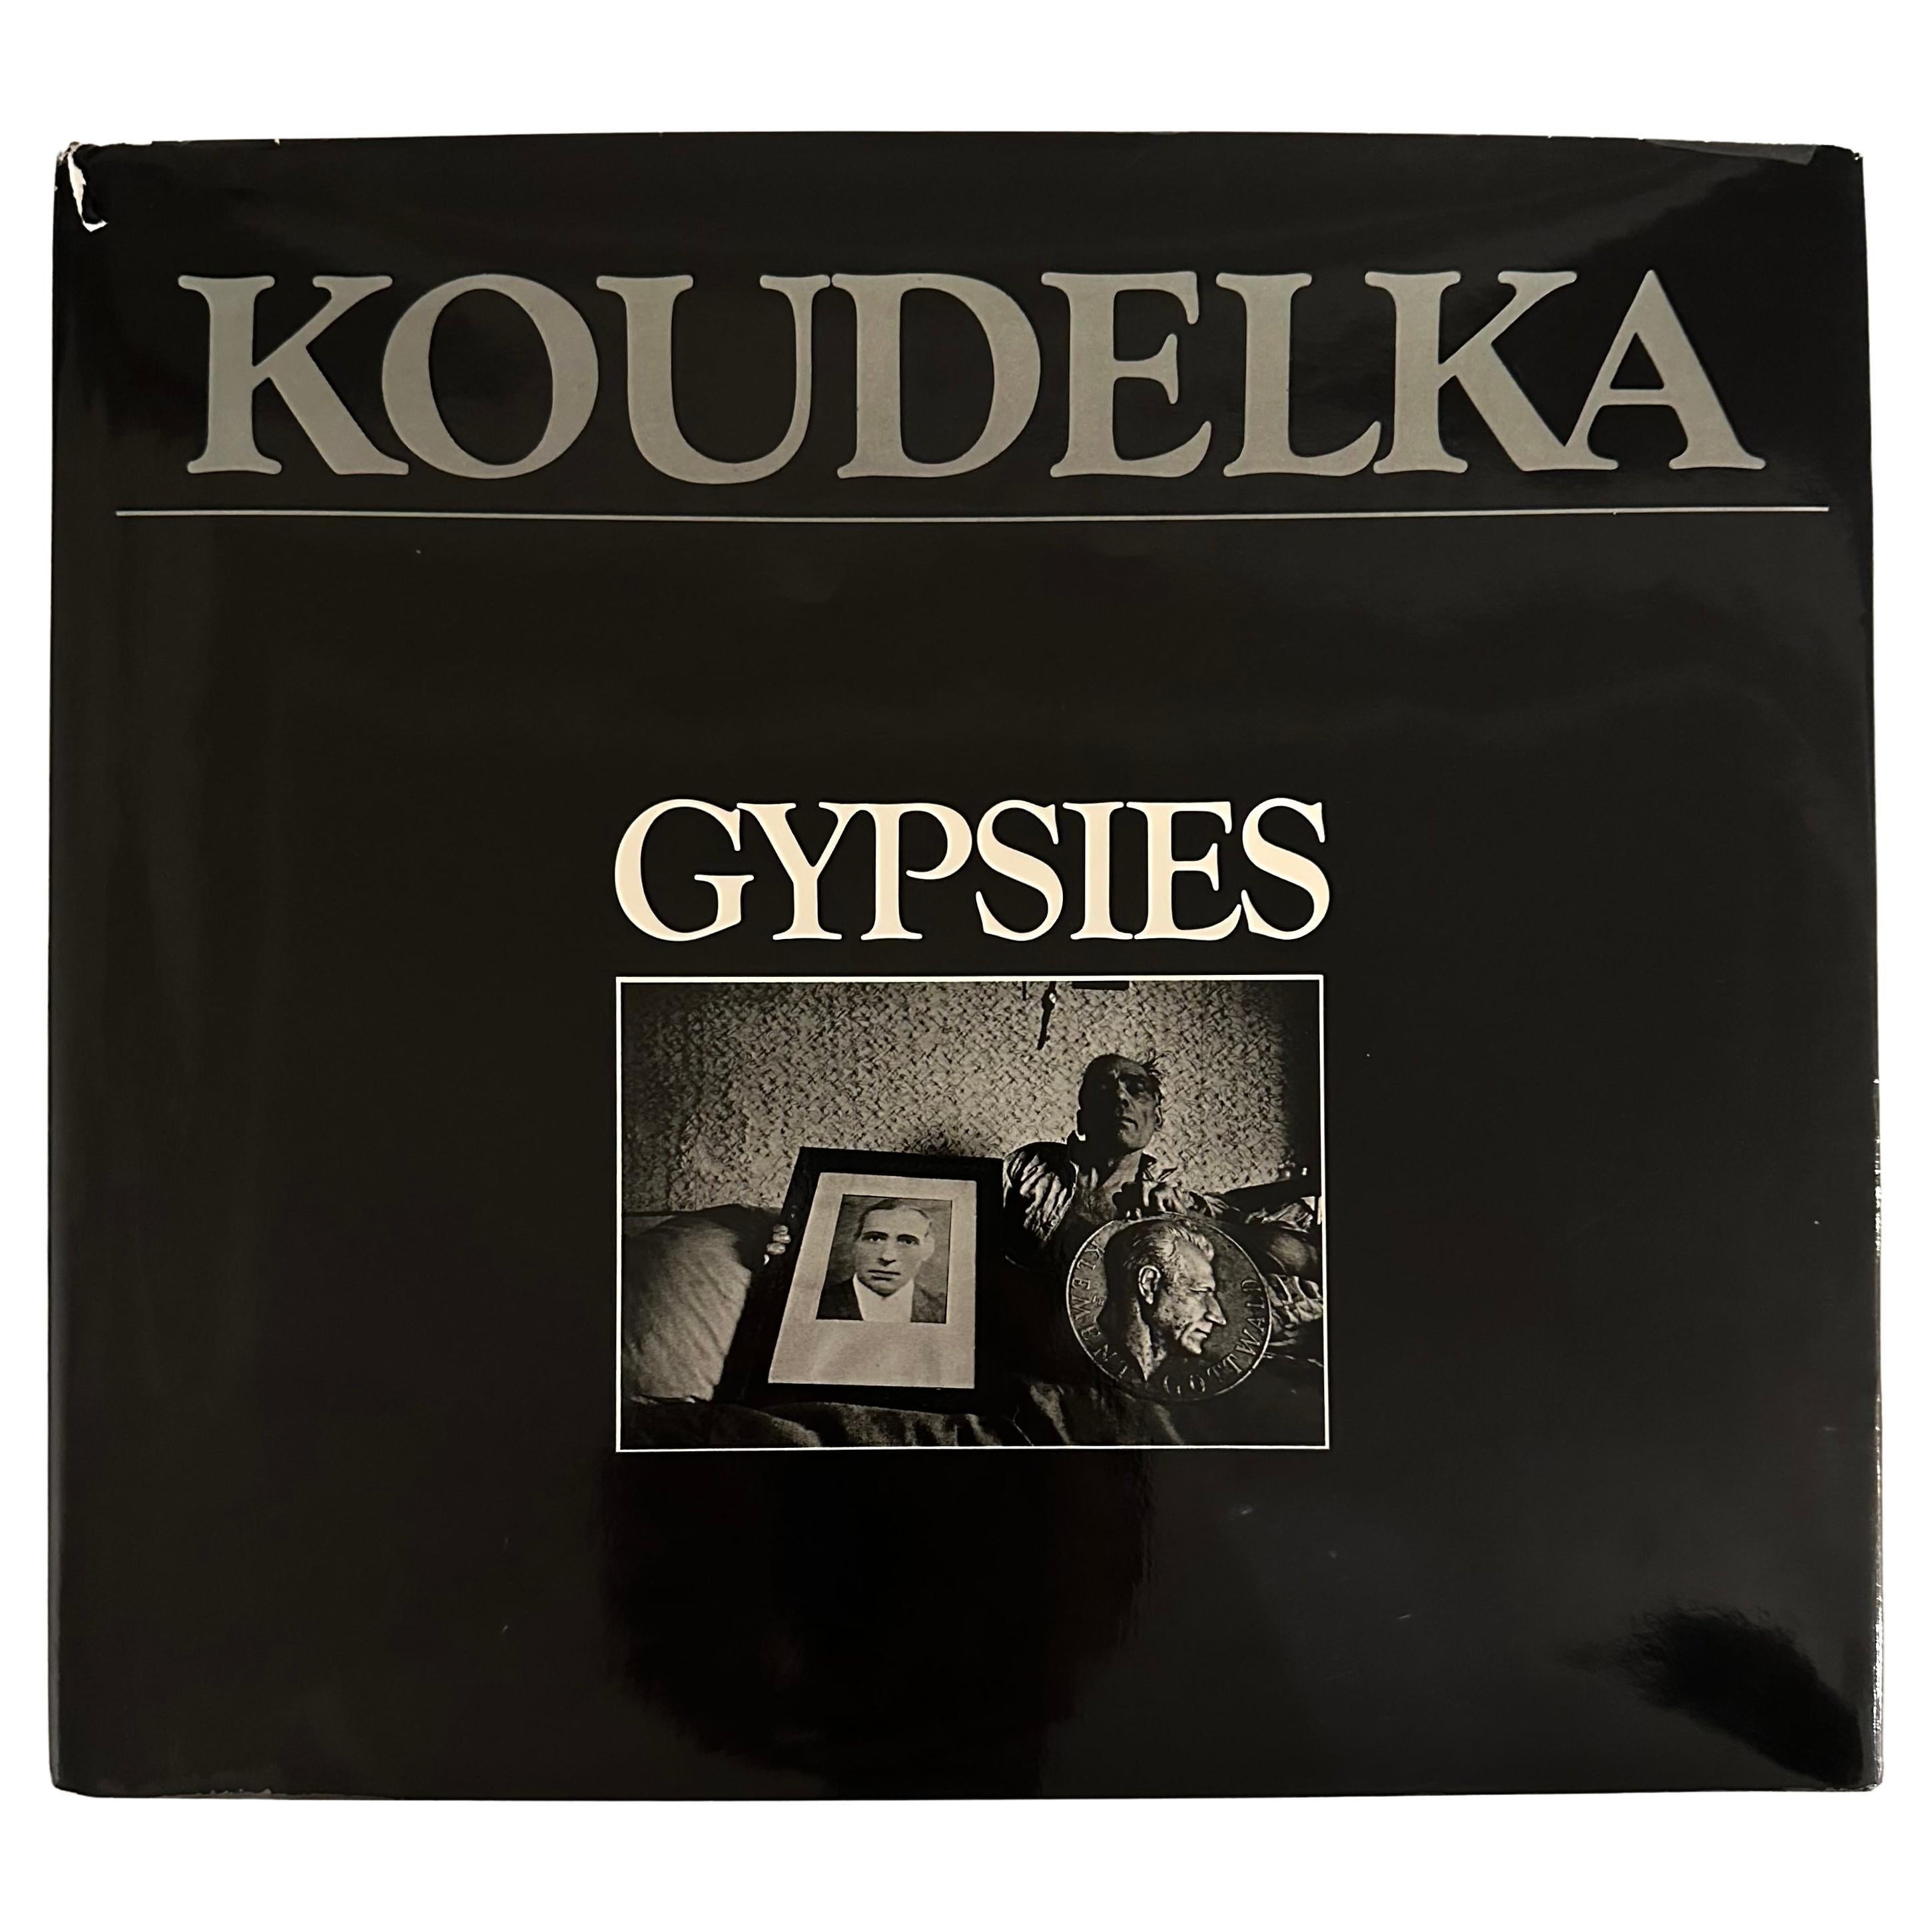 GYPSIES - Josef Koudelka - 1st U.S. edition, New York, 1975